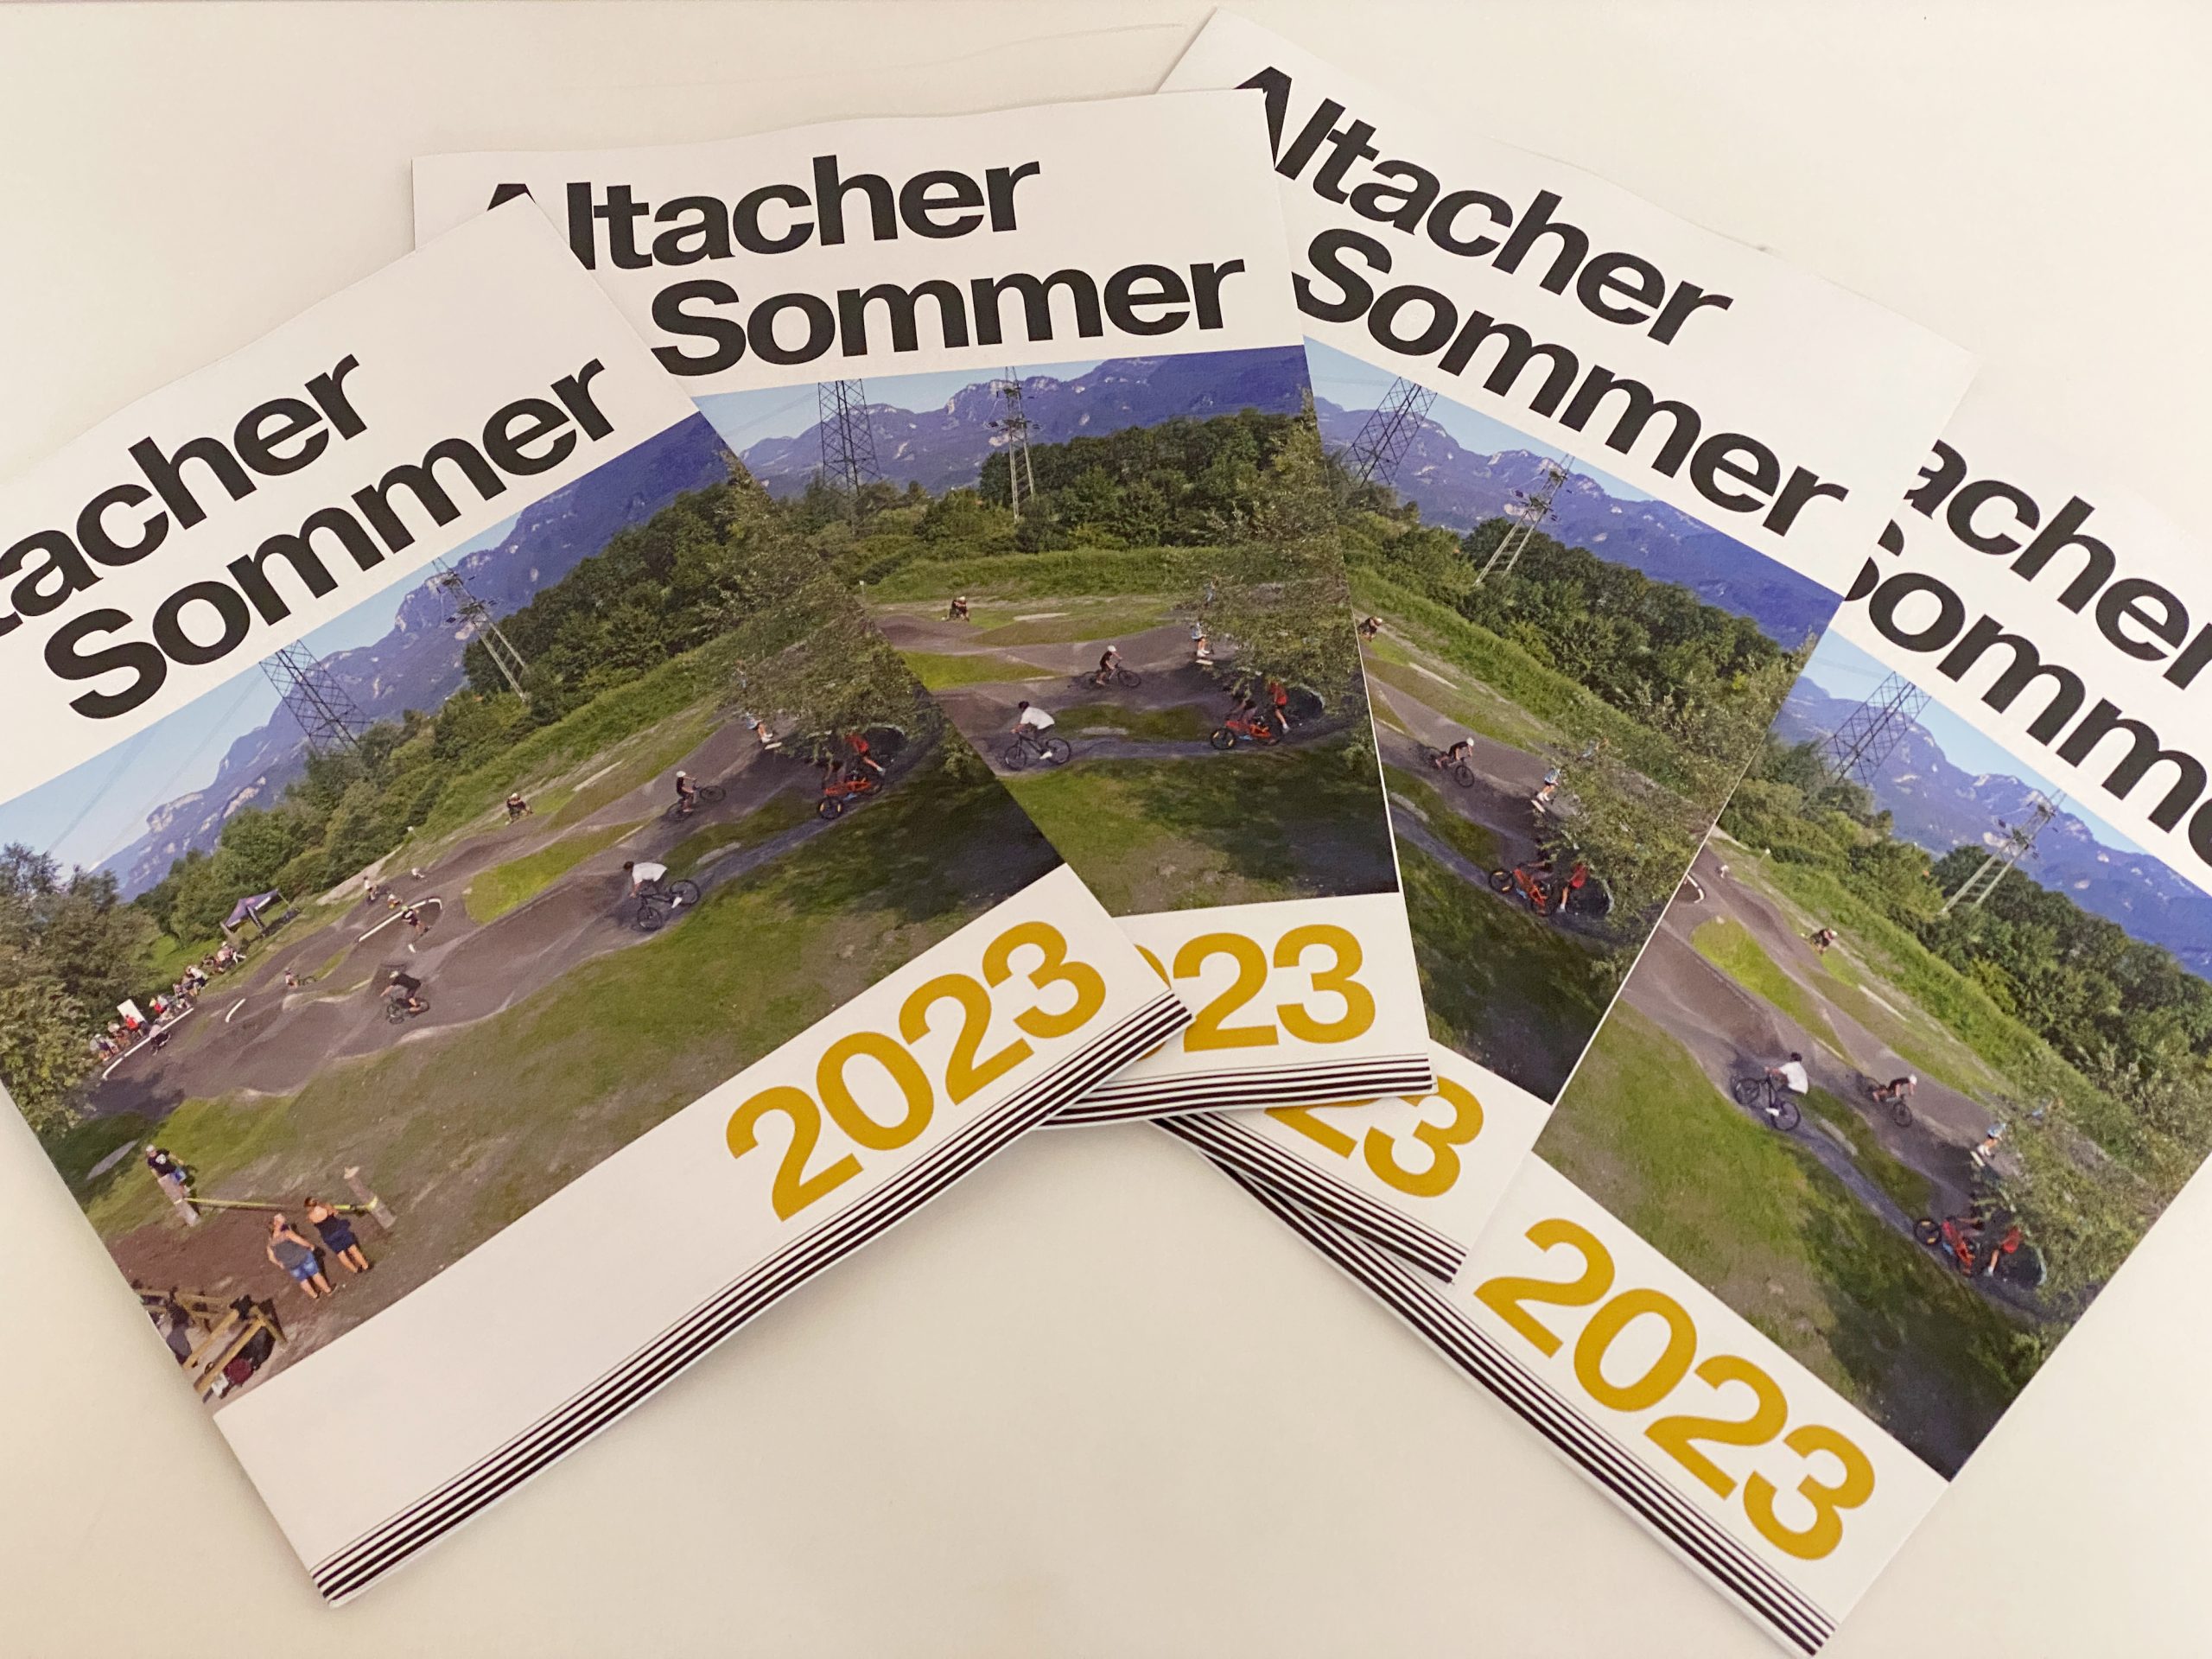 Altacher Sommer Broschüre